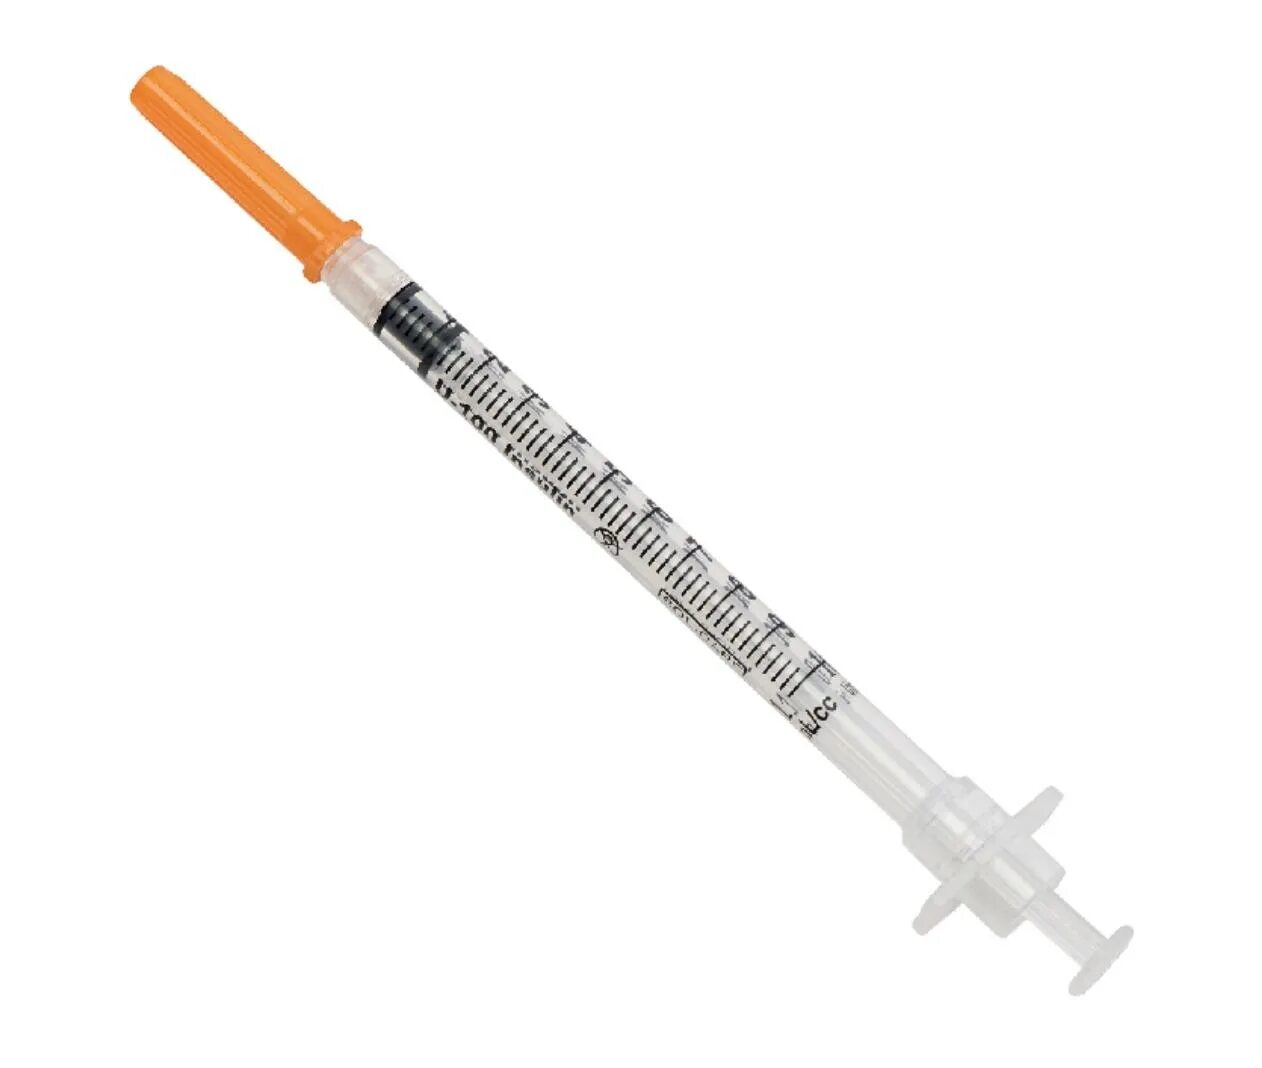 10 мг в мл в шприце. Insulin Syringe 1ml. Шприц инсулиновый 1 мл 0.02 мл. 1 Мг в инсулиновом шприце. Syringe 1 ml.